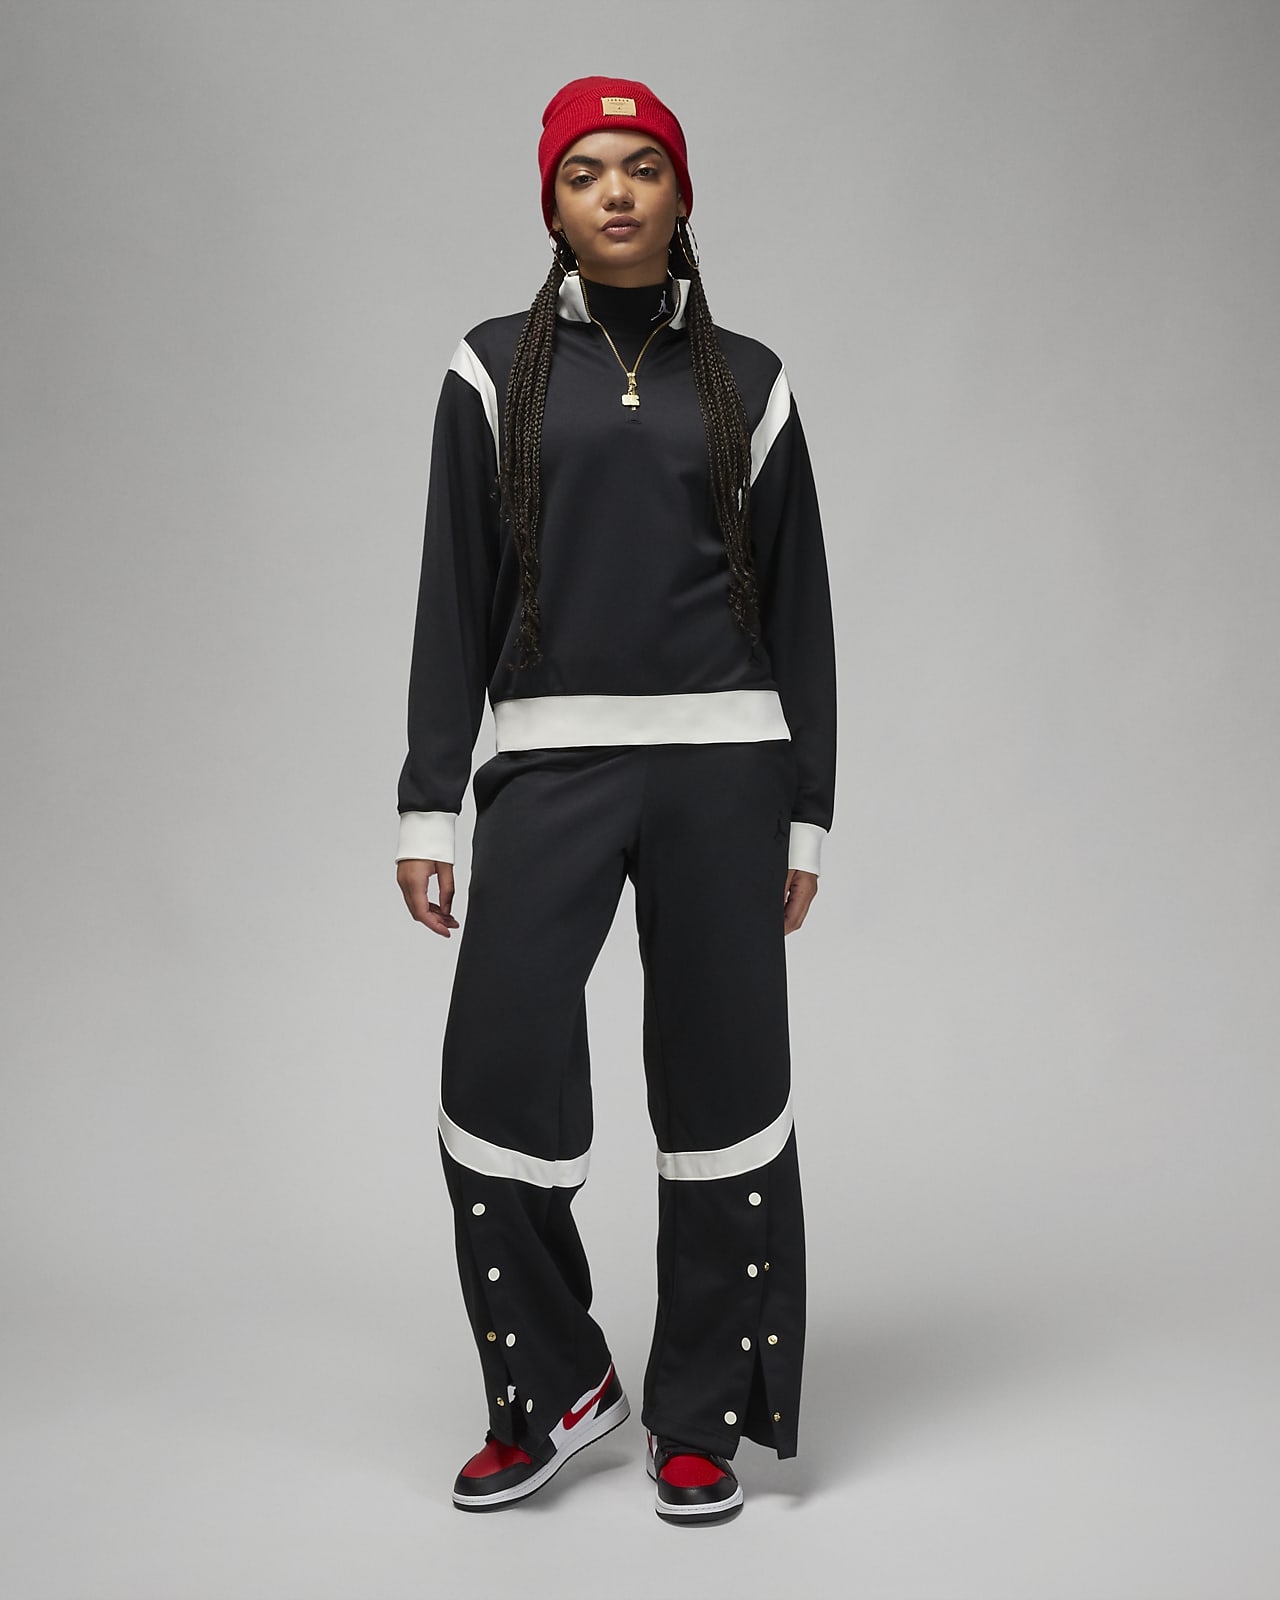 Jordan (Her)itage Women's Suit Top. Nike AT